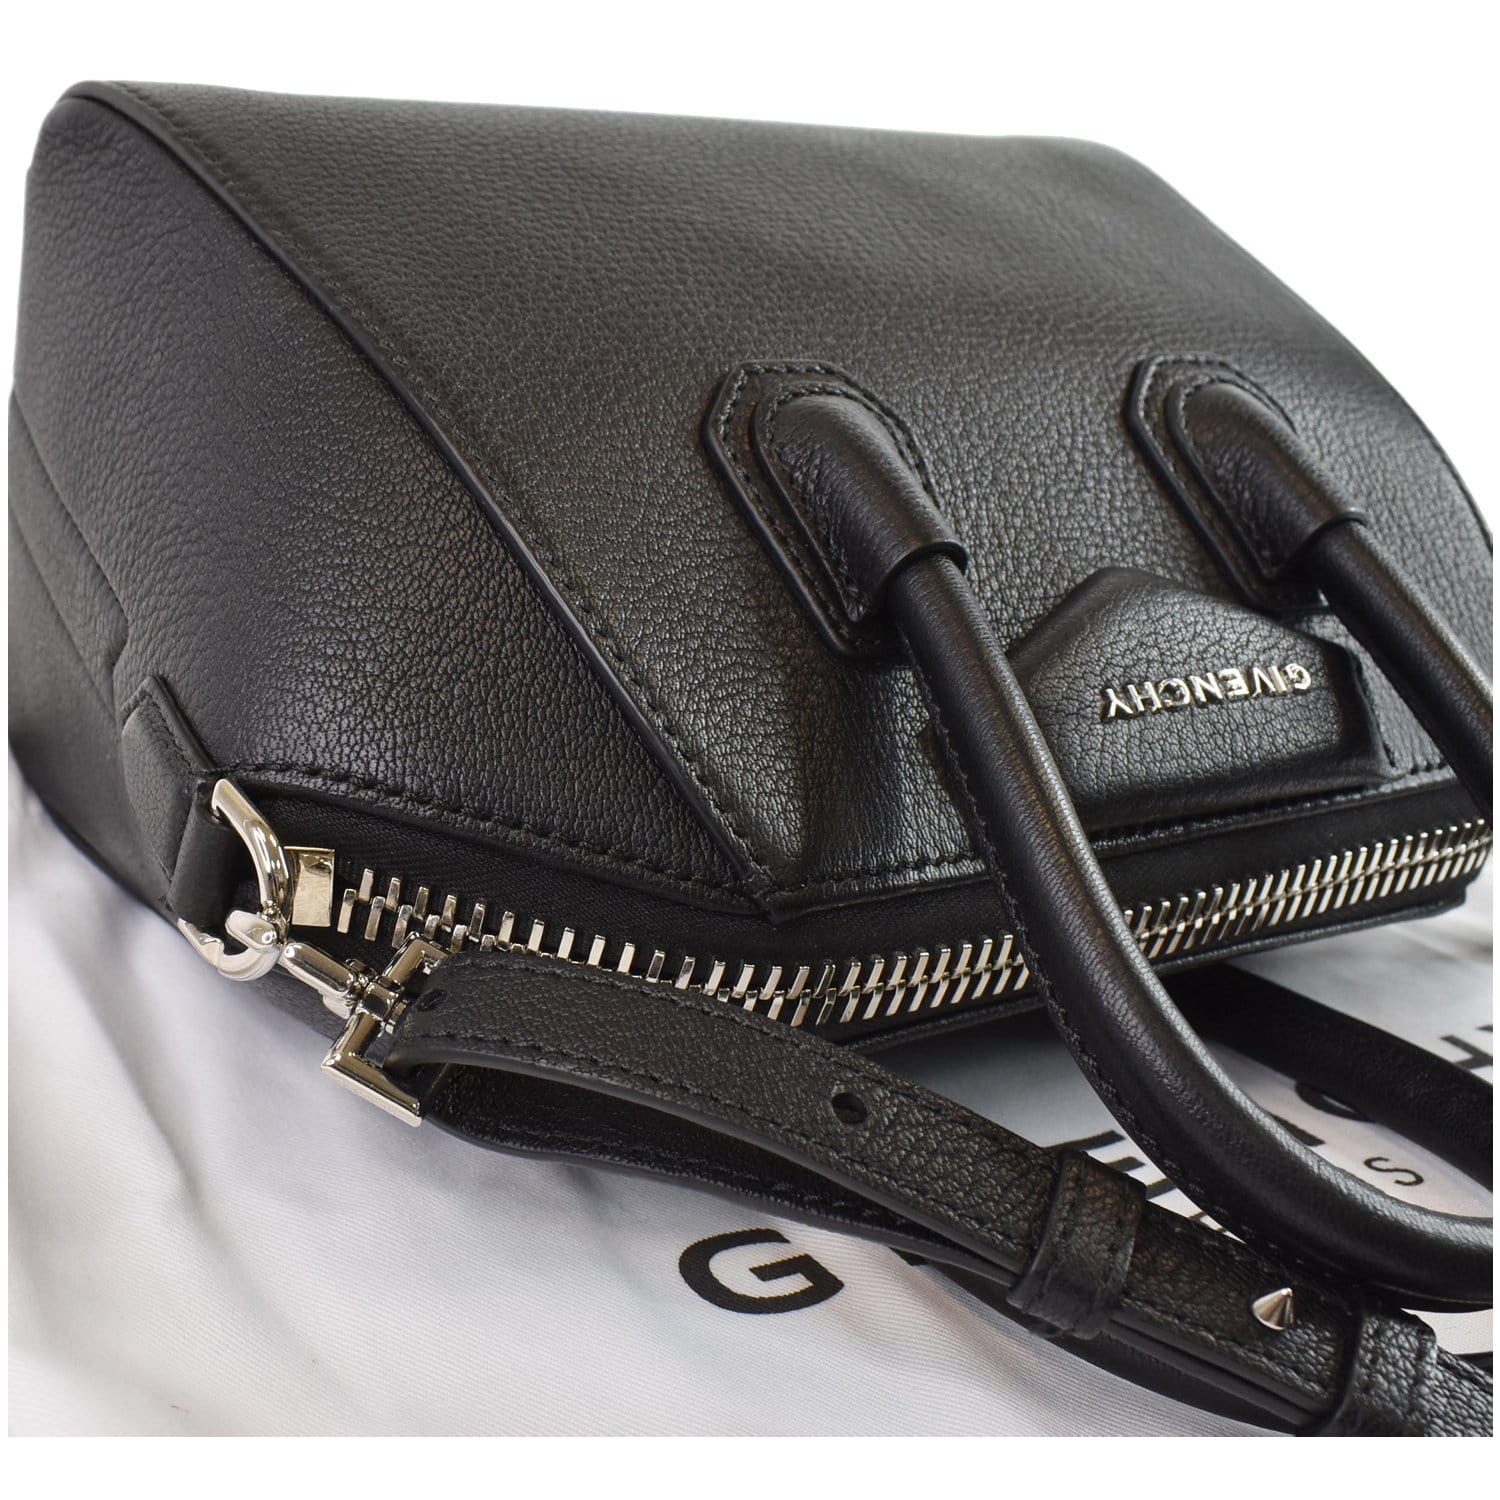 GIVENCHY Antigona Mini Leather Shoulder Bag Black